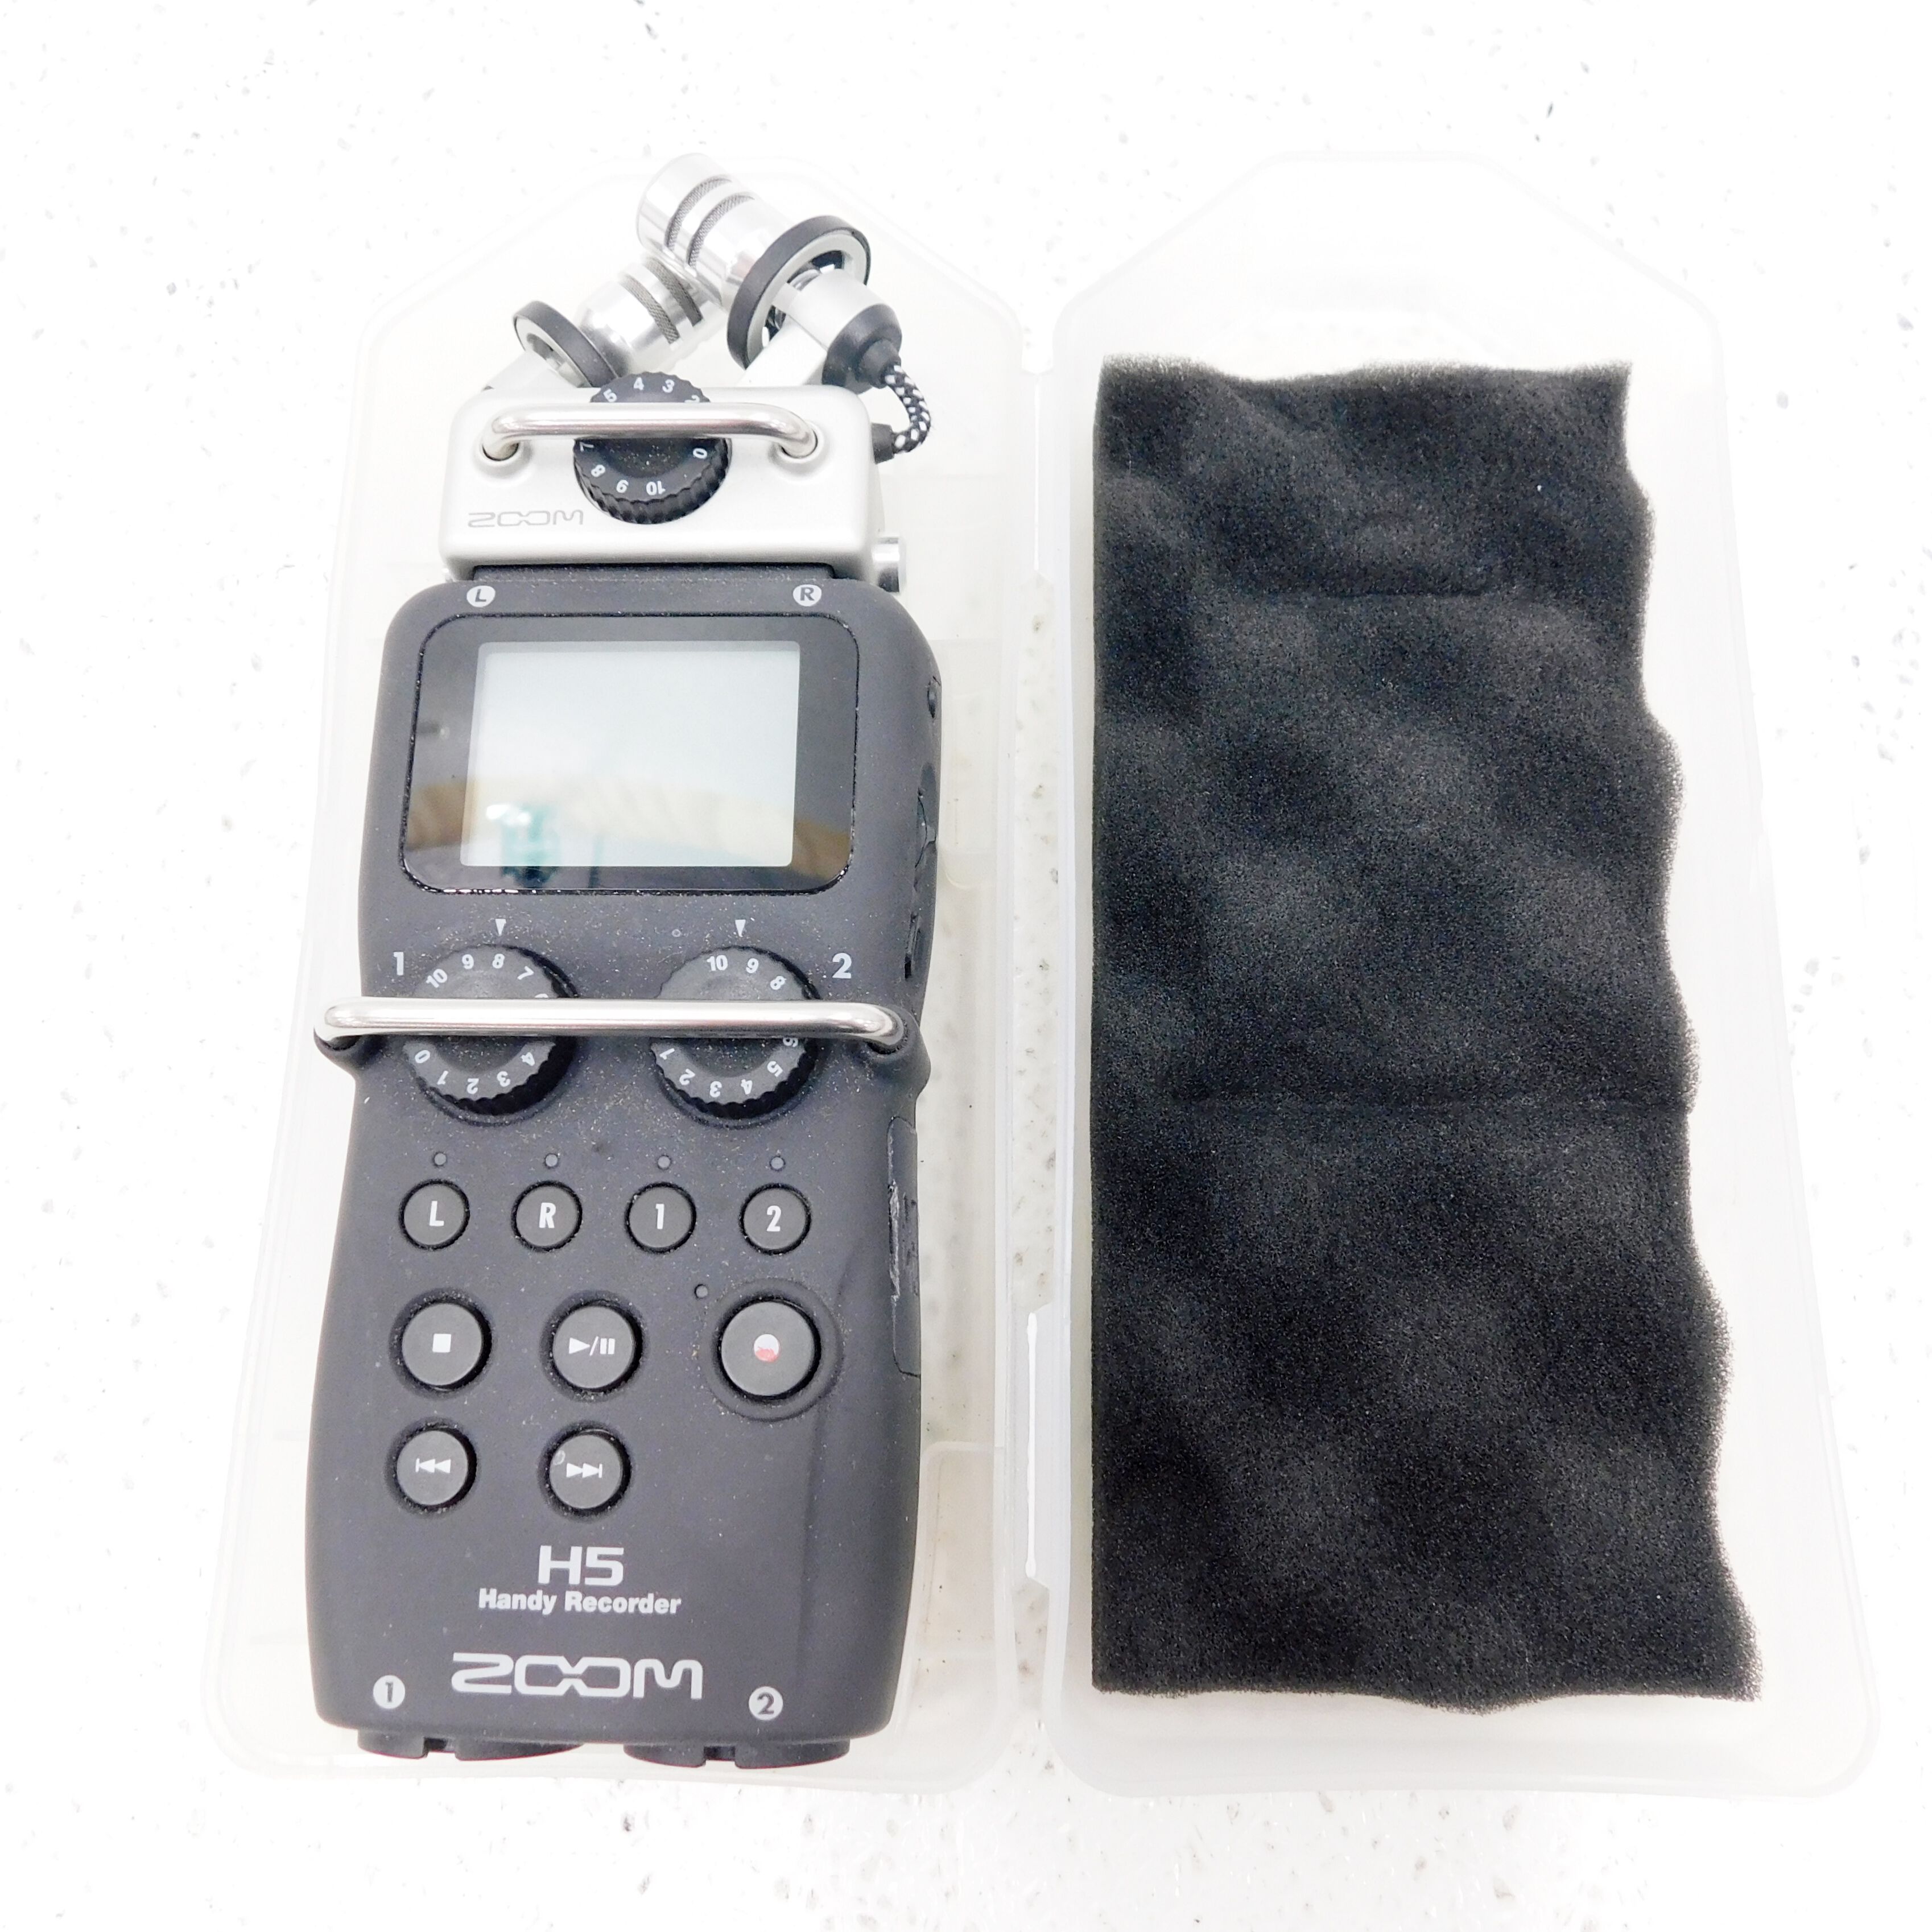 H5 Handy Recorder ZOOM 録音 ICレコーダー